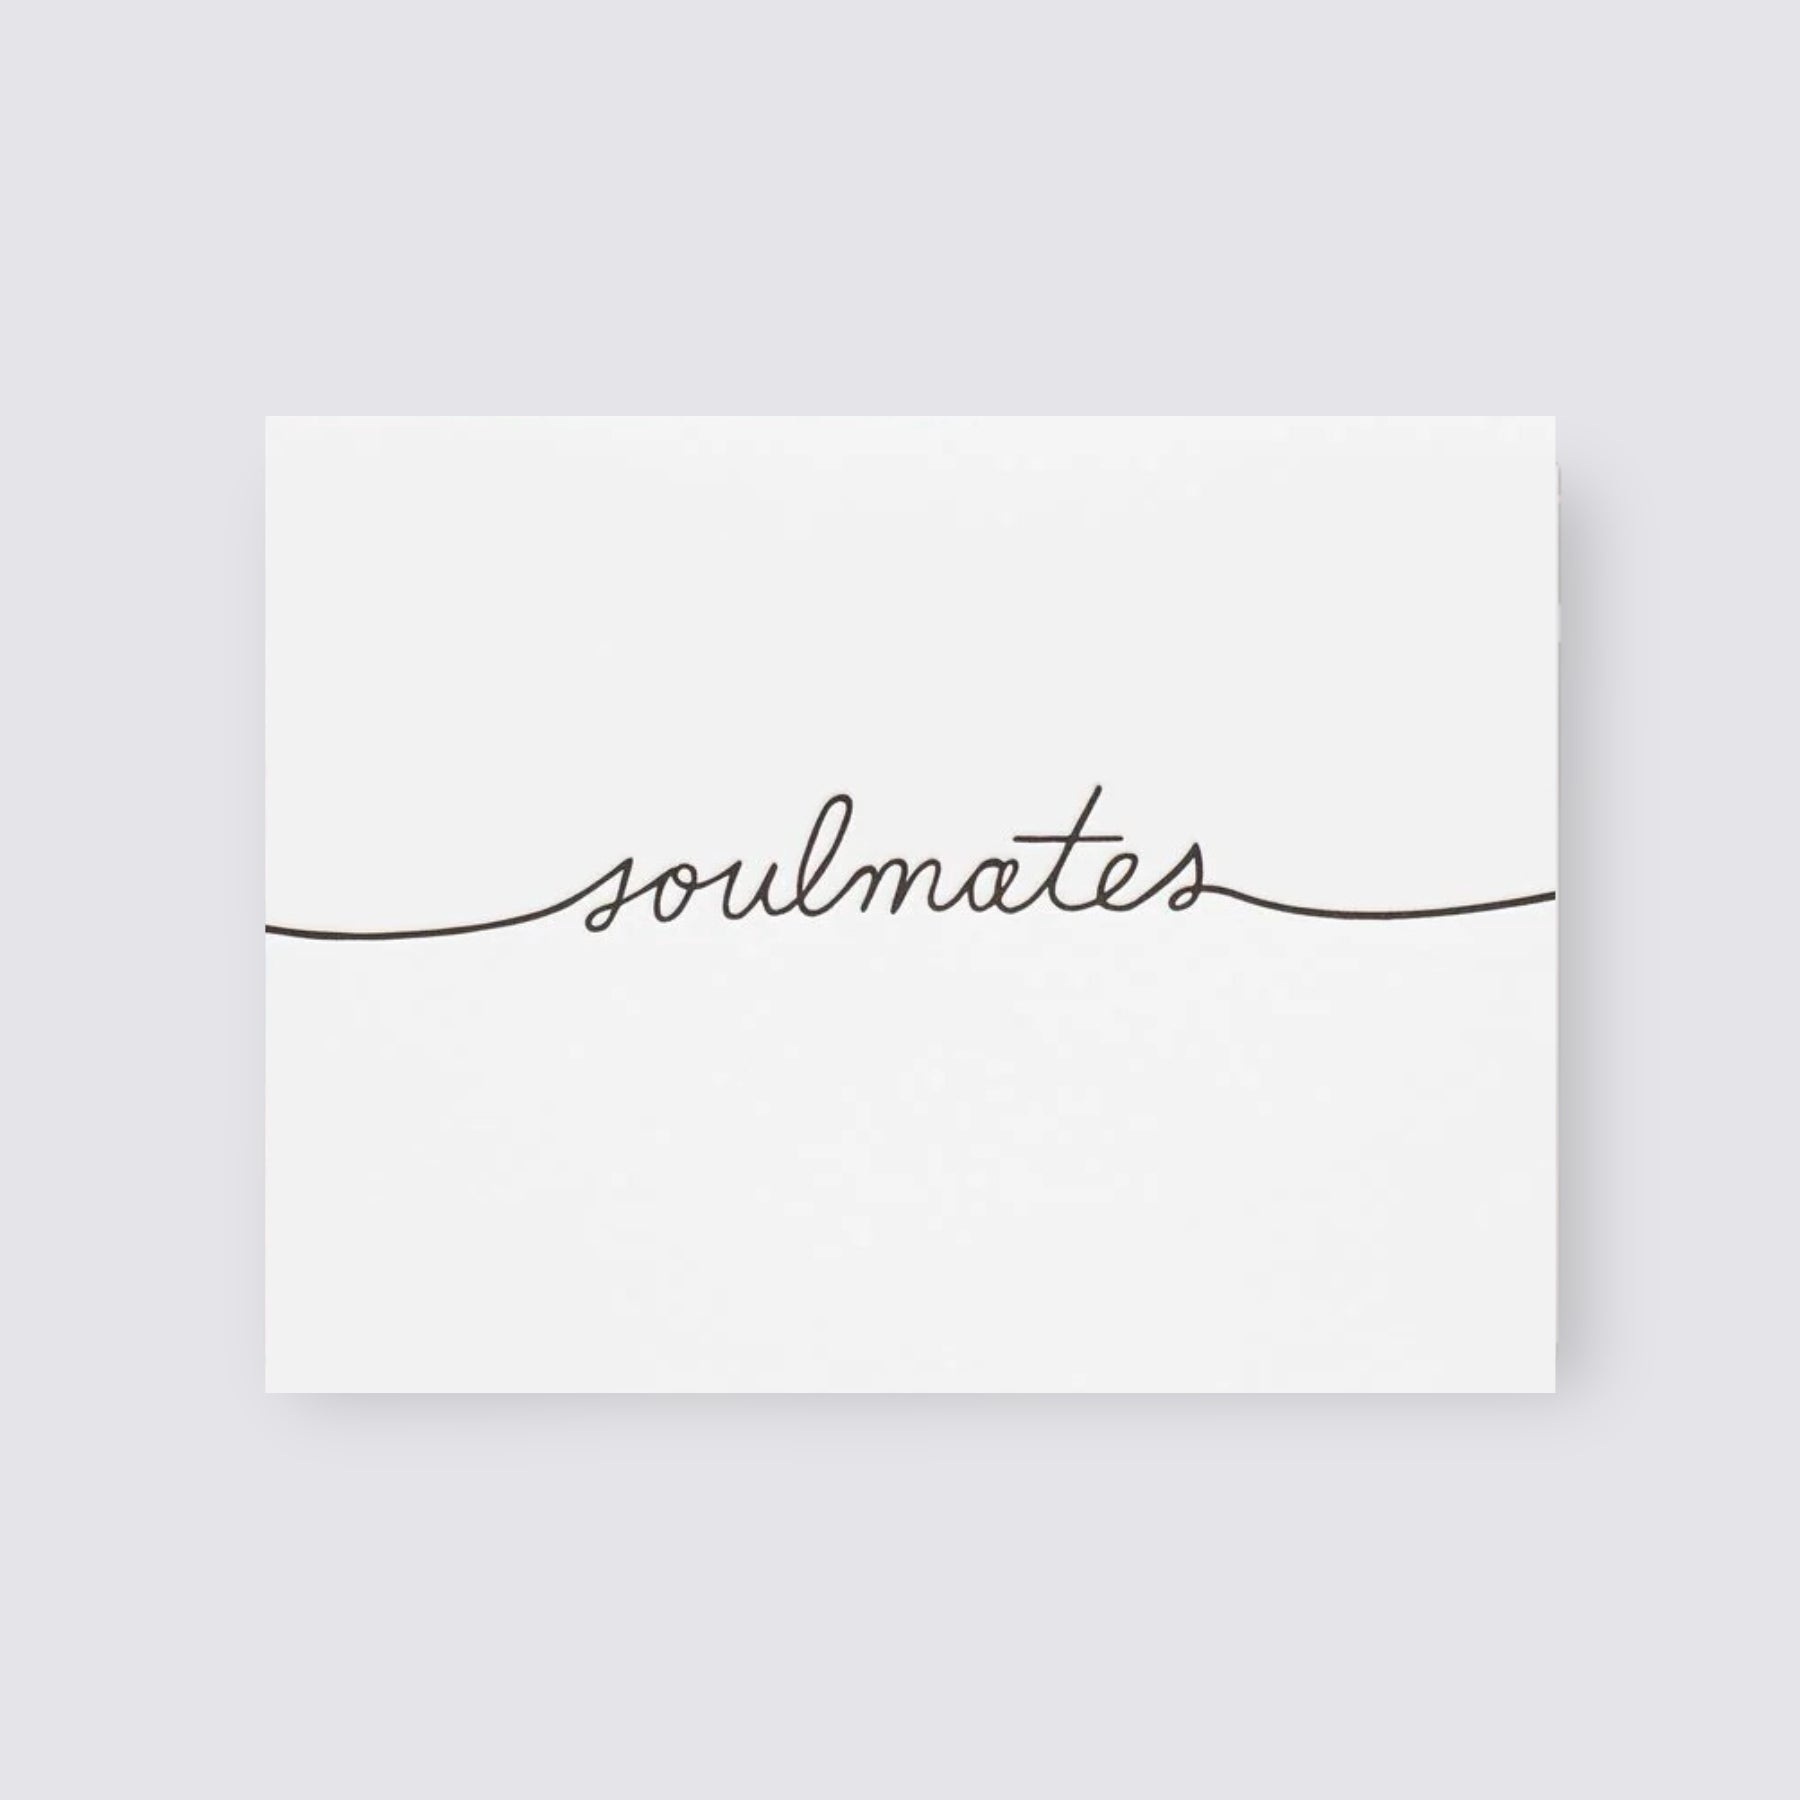 Soulmates card